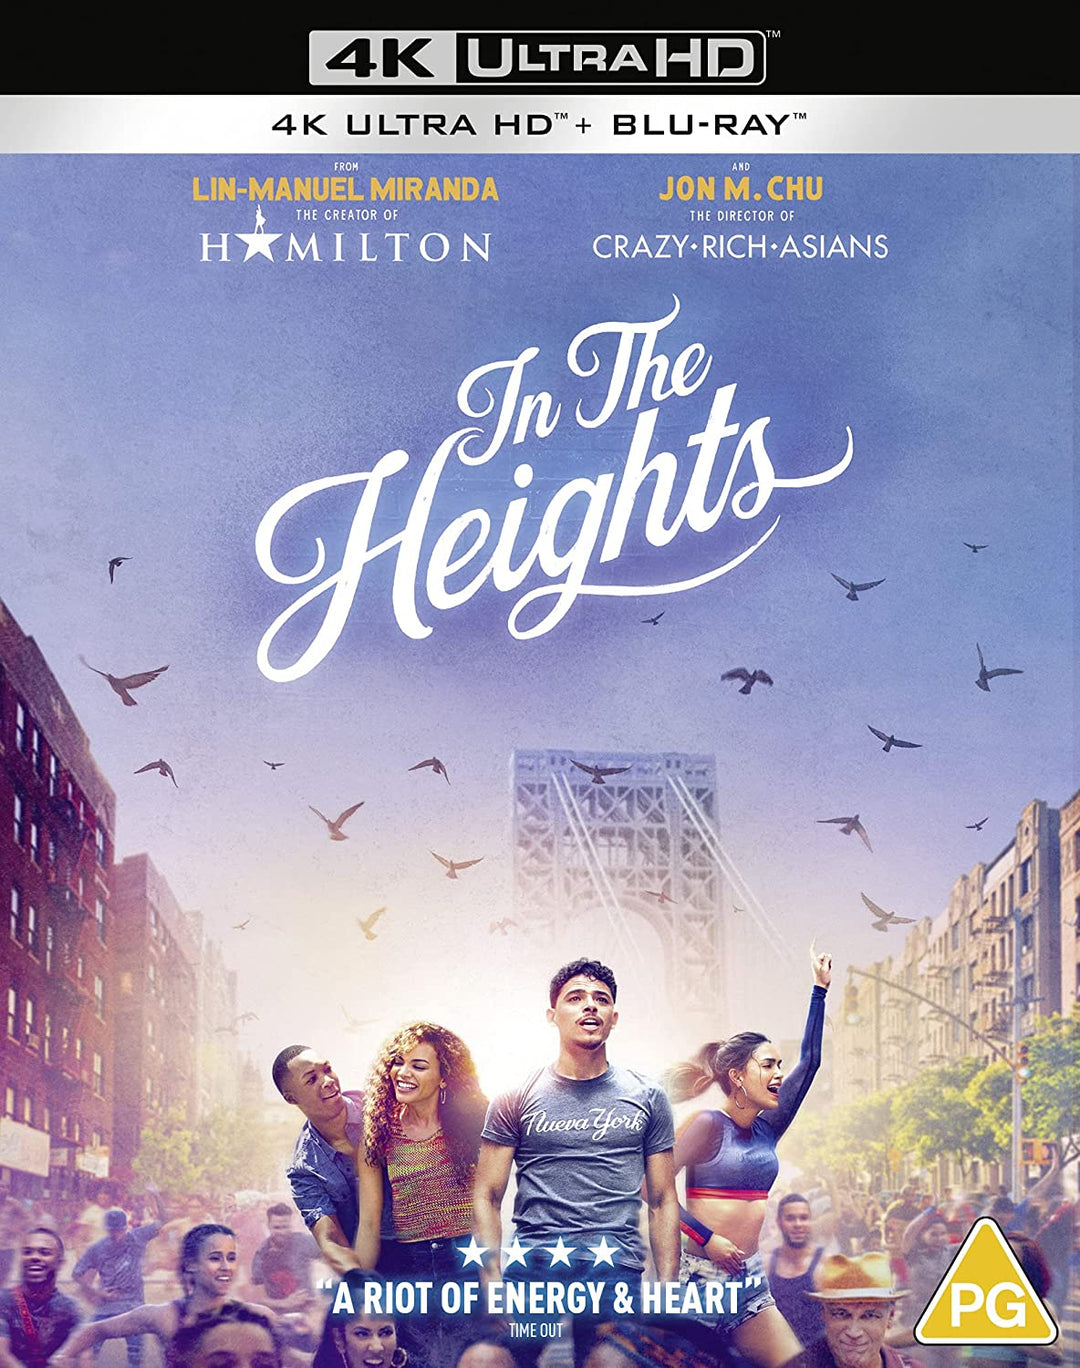 In The Heights [4K Ultra HD] [2021] [Region Free] – Musical/Drama [Blu-ray]